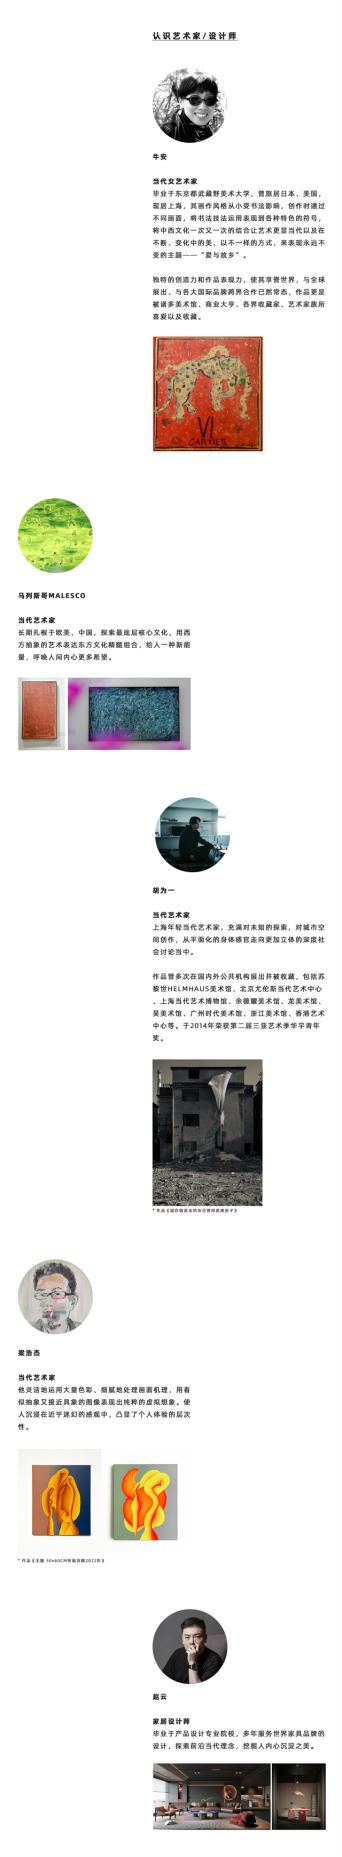 E:\0613\JADEL 杰德尔设计上海新闻稿资料包\640\9.jpg9